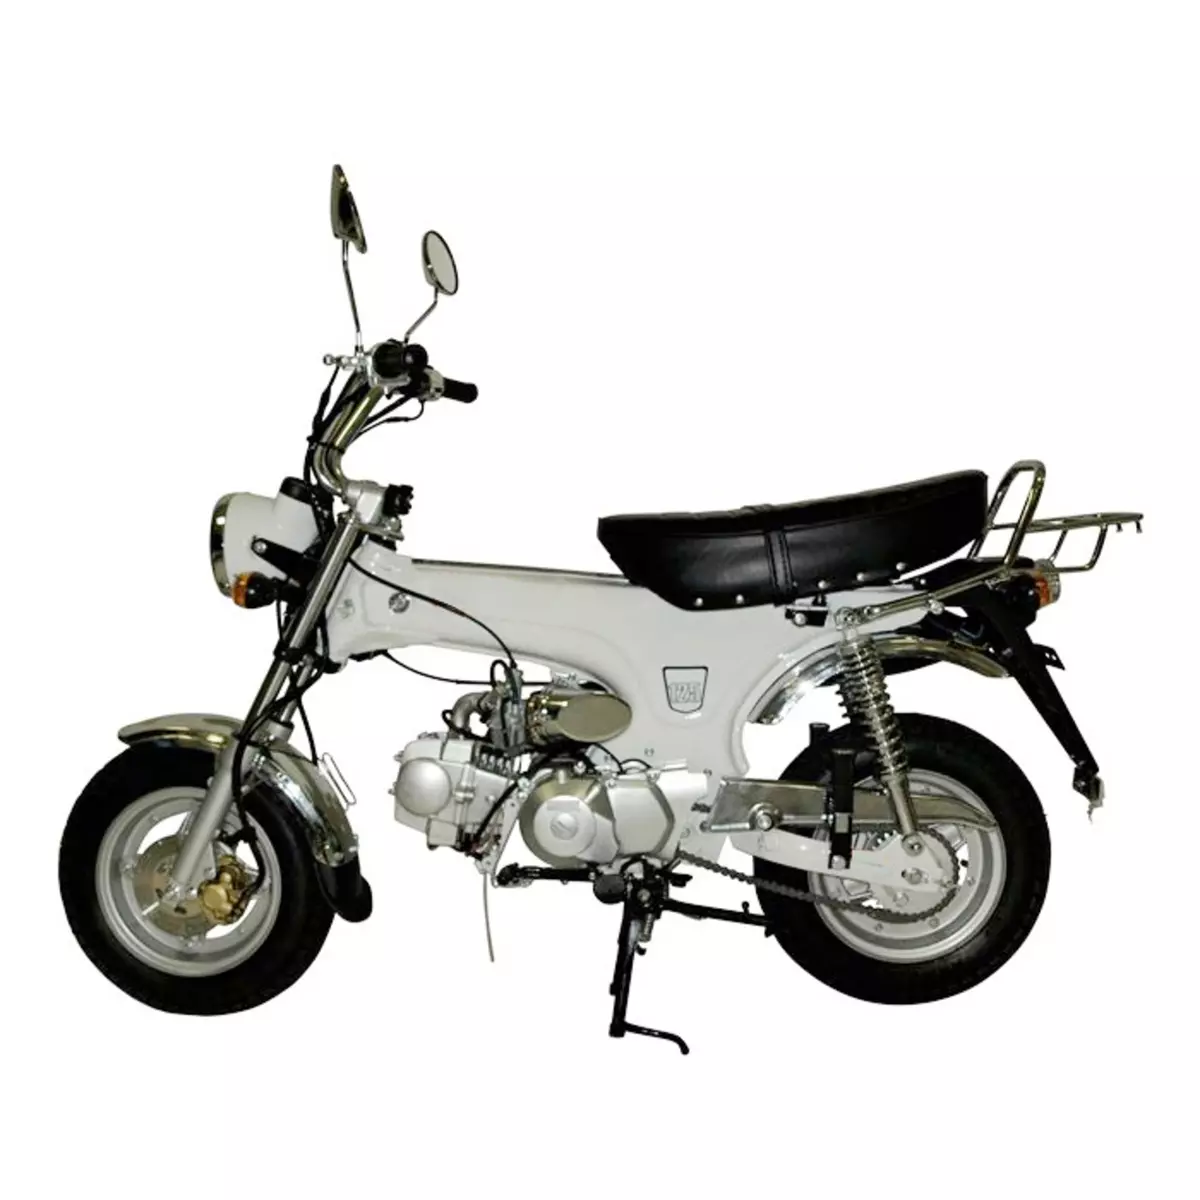 Mini moto 125 cc 